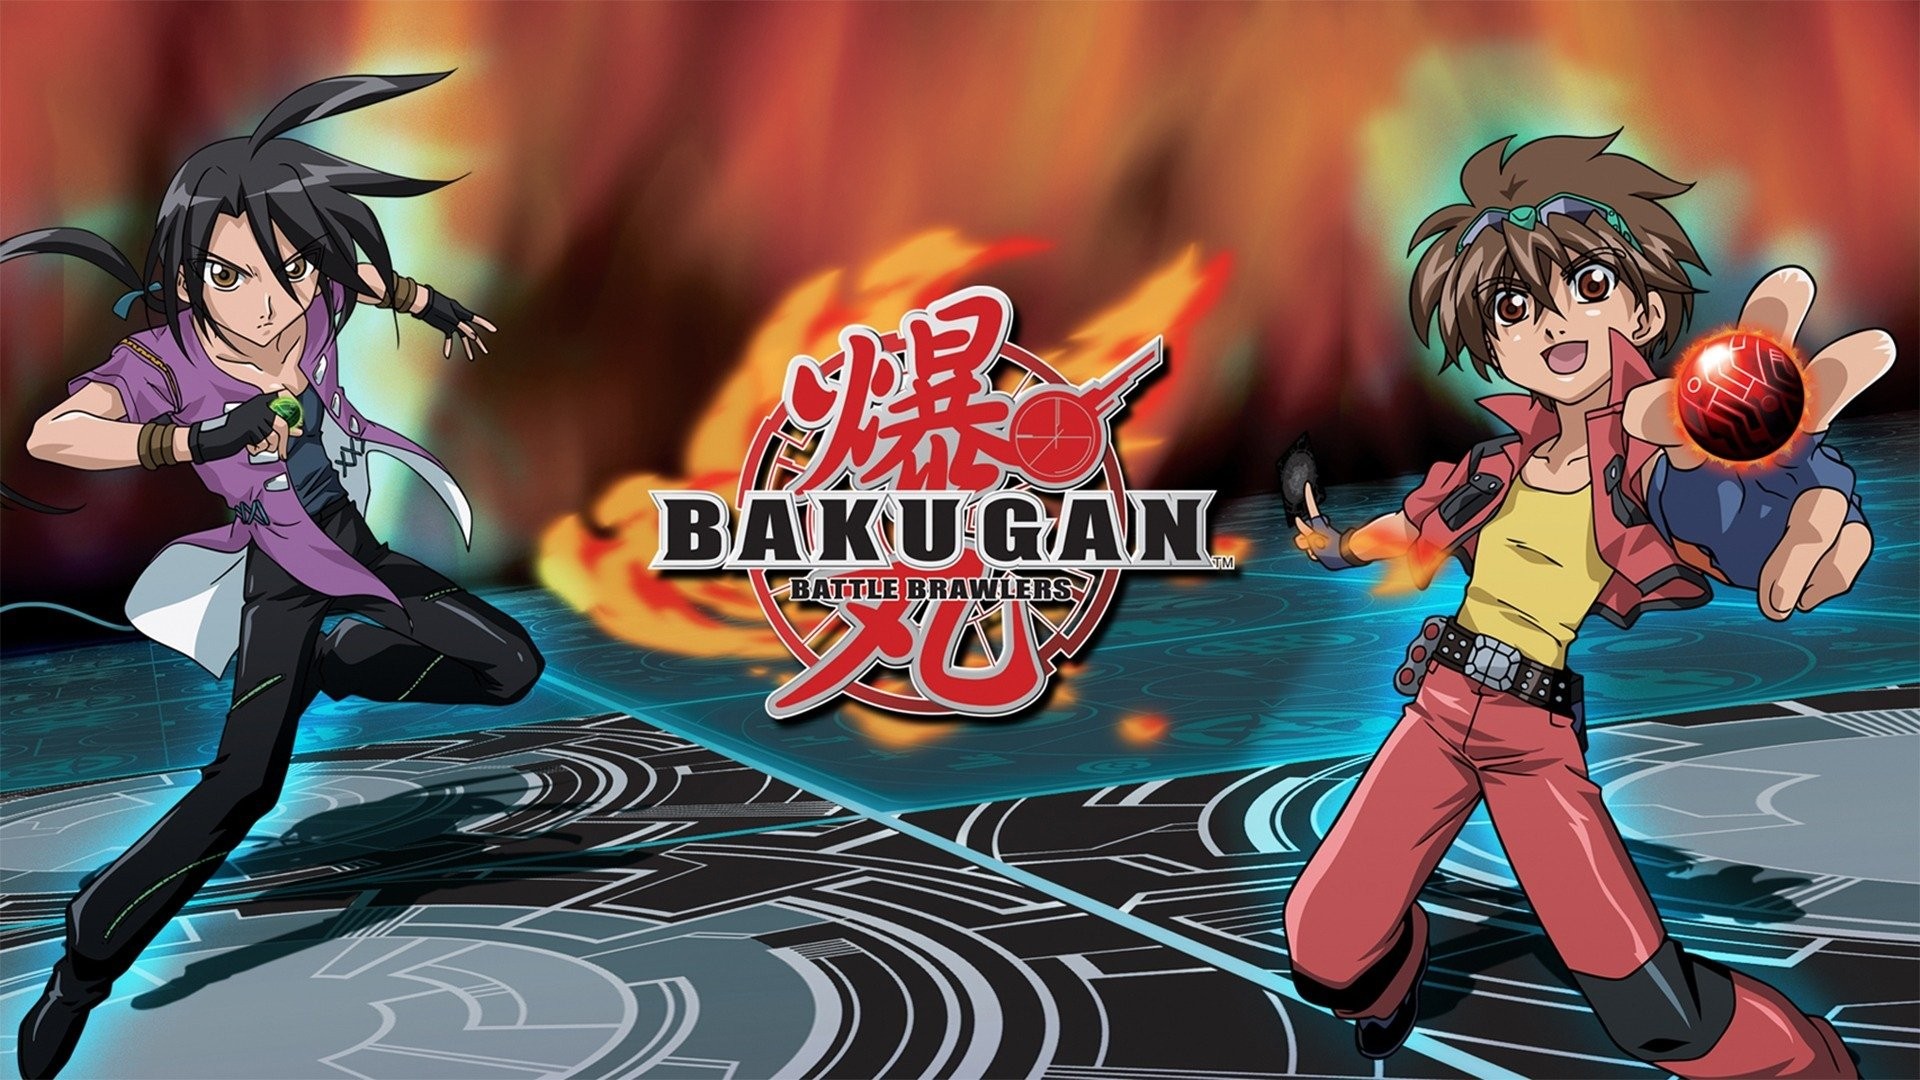 Watch Bakugan Battle Brawlers season 1 episode 47 streaming online